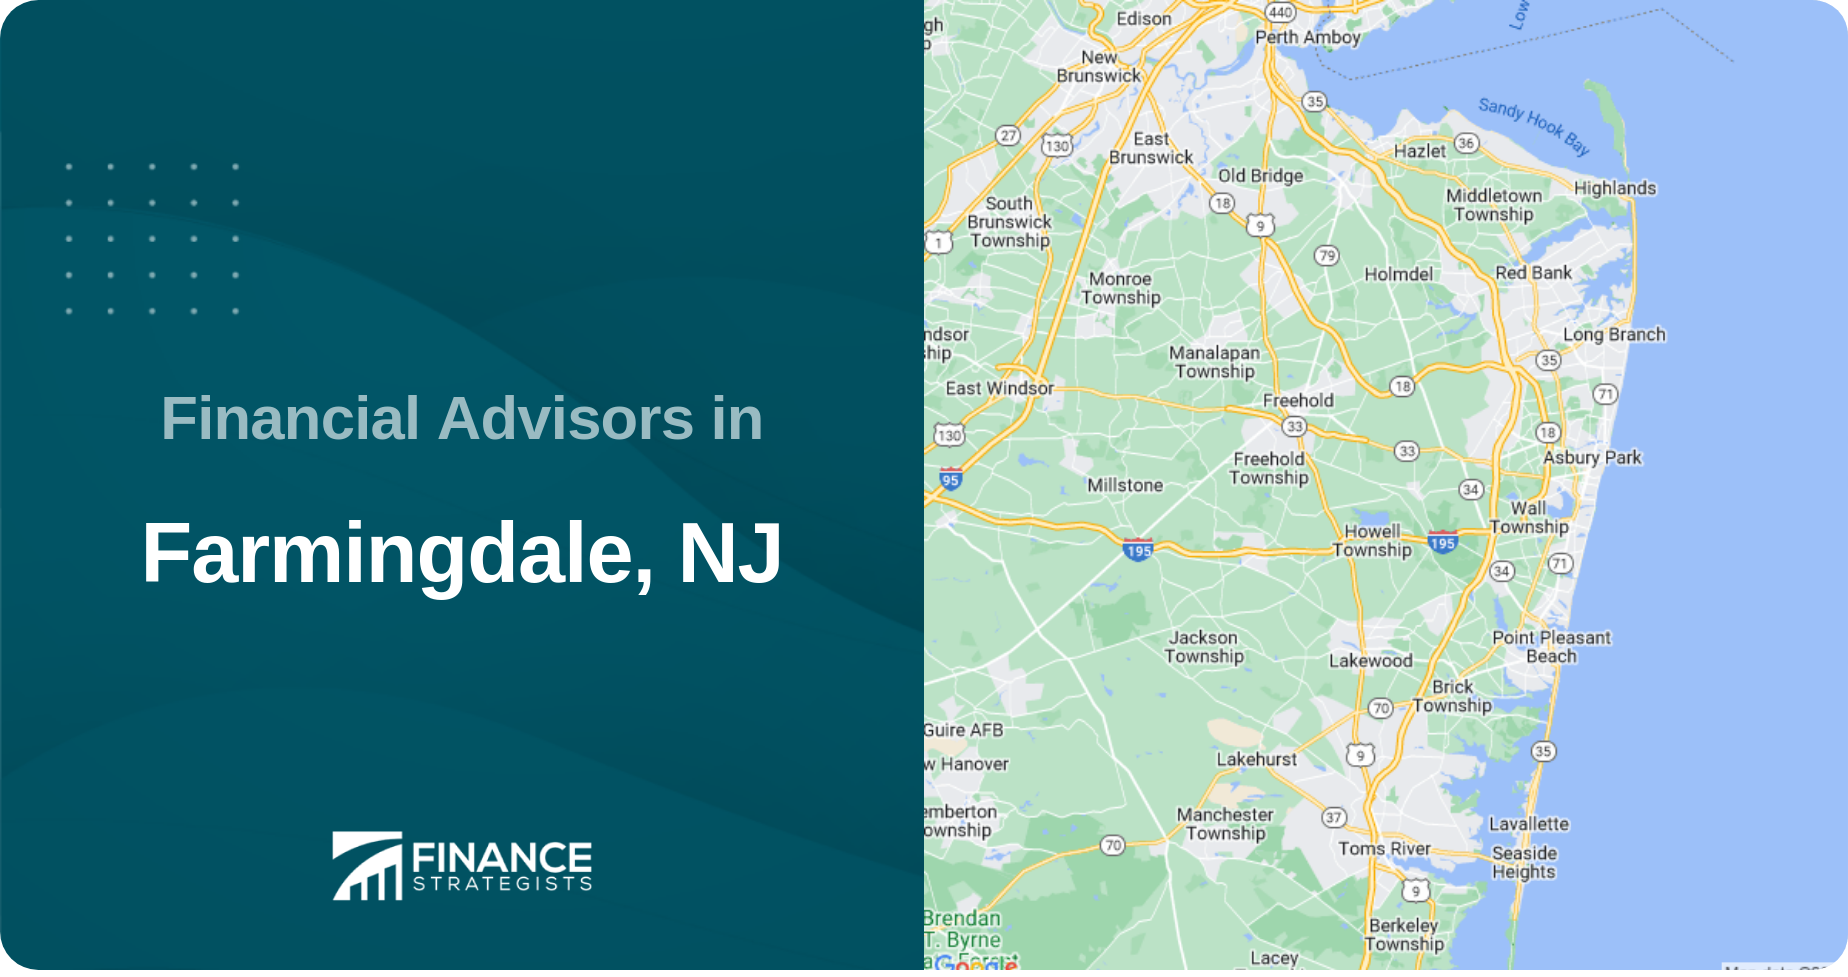 Financial Advisors in Farmingdale, NJ